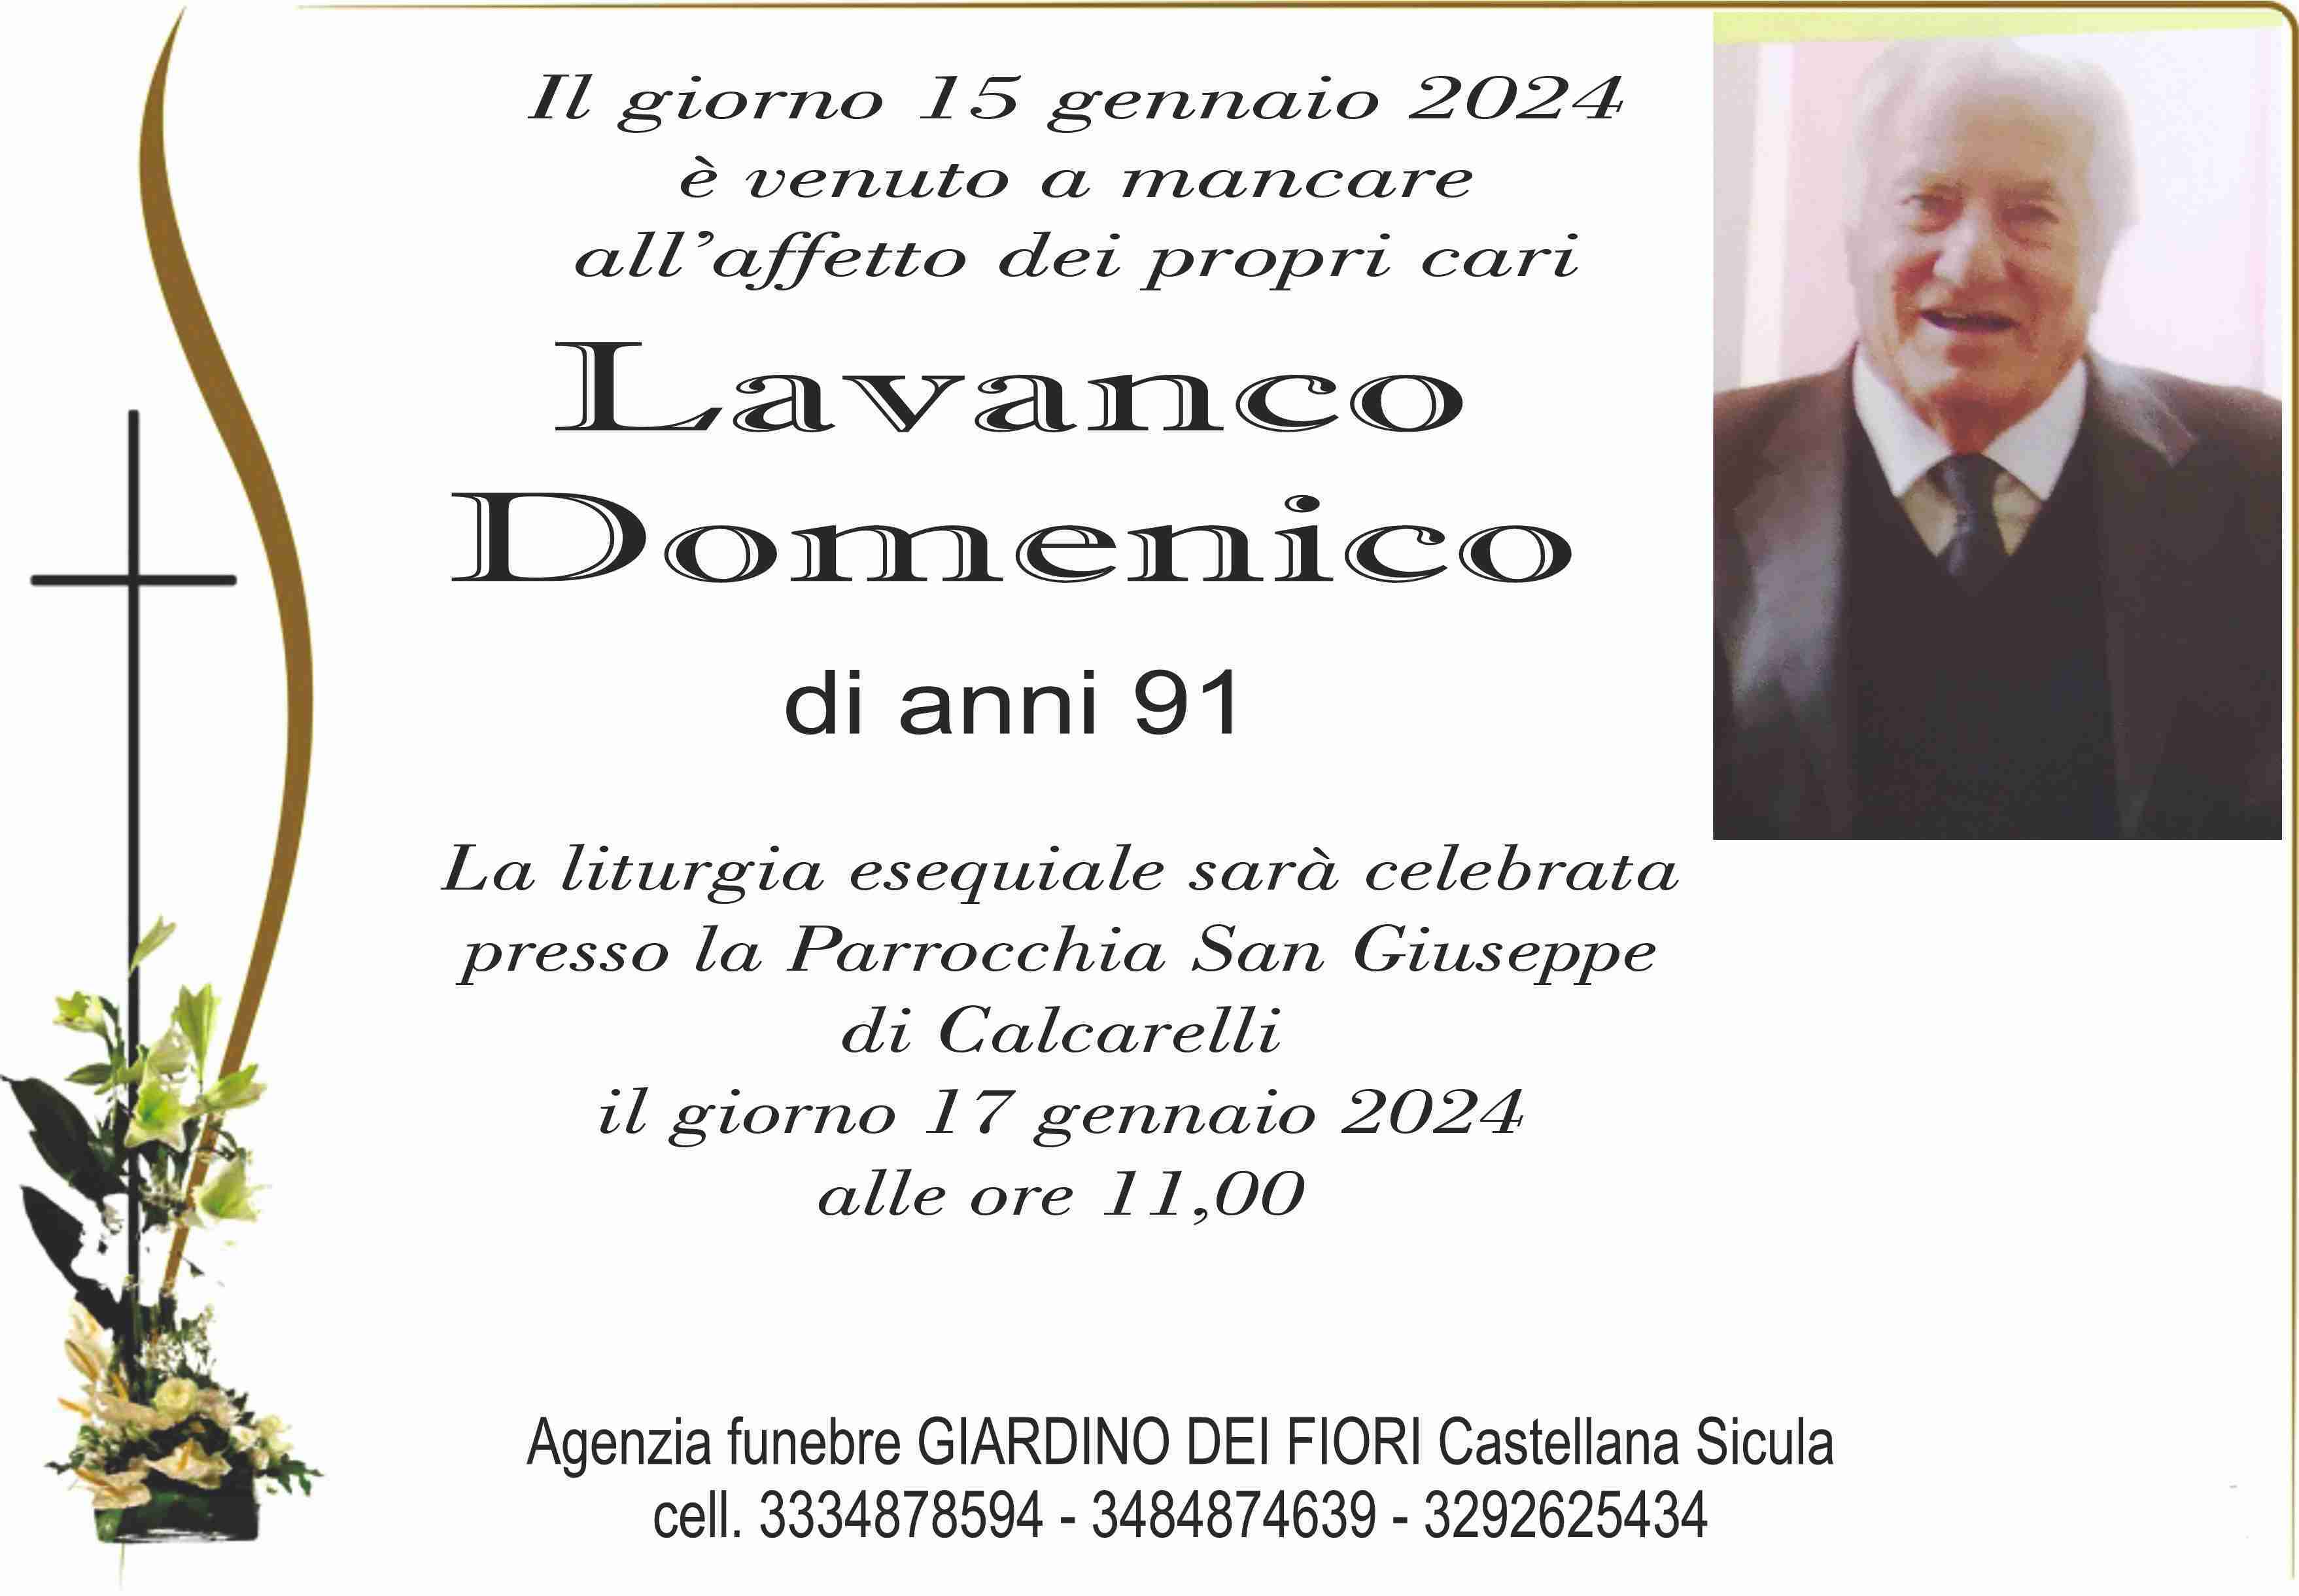 Domenico Lavanco